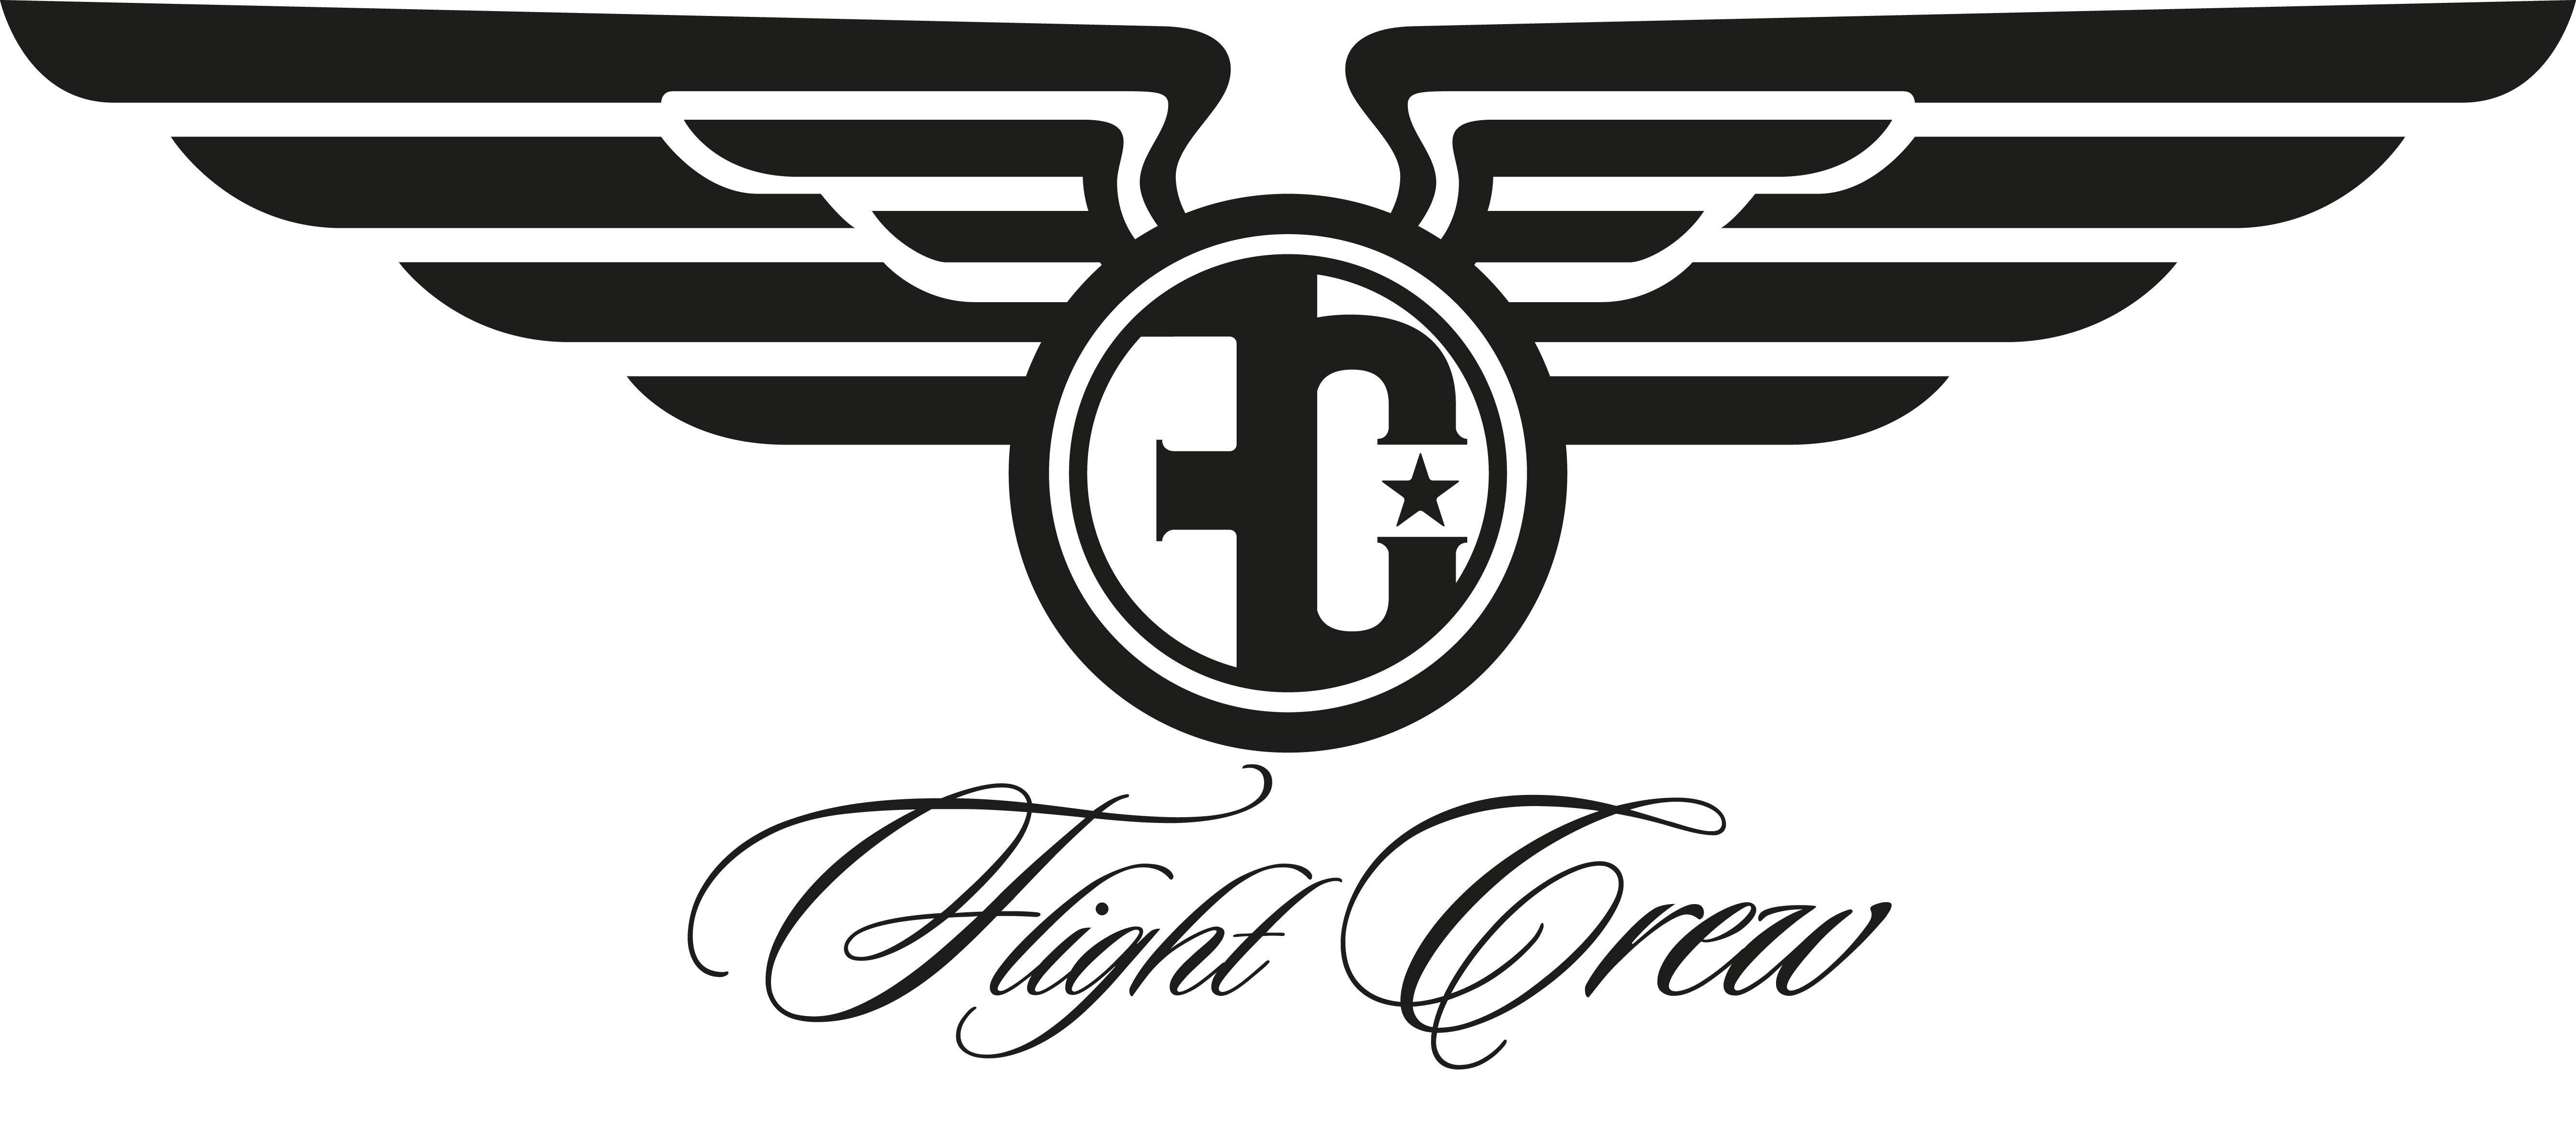 Flight Team Logo - Flight Crew LOGO_02. Proof Culture Sneaker Lifestyle Brand